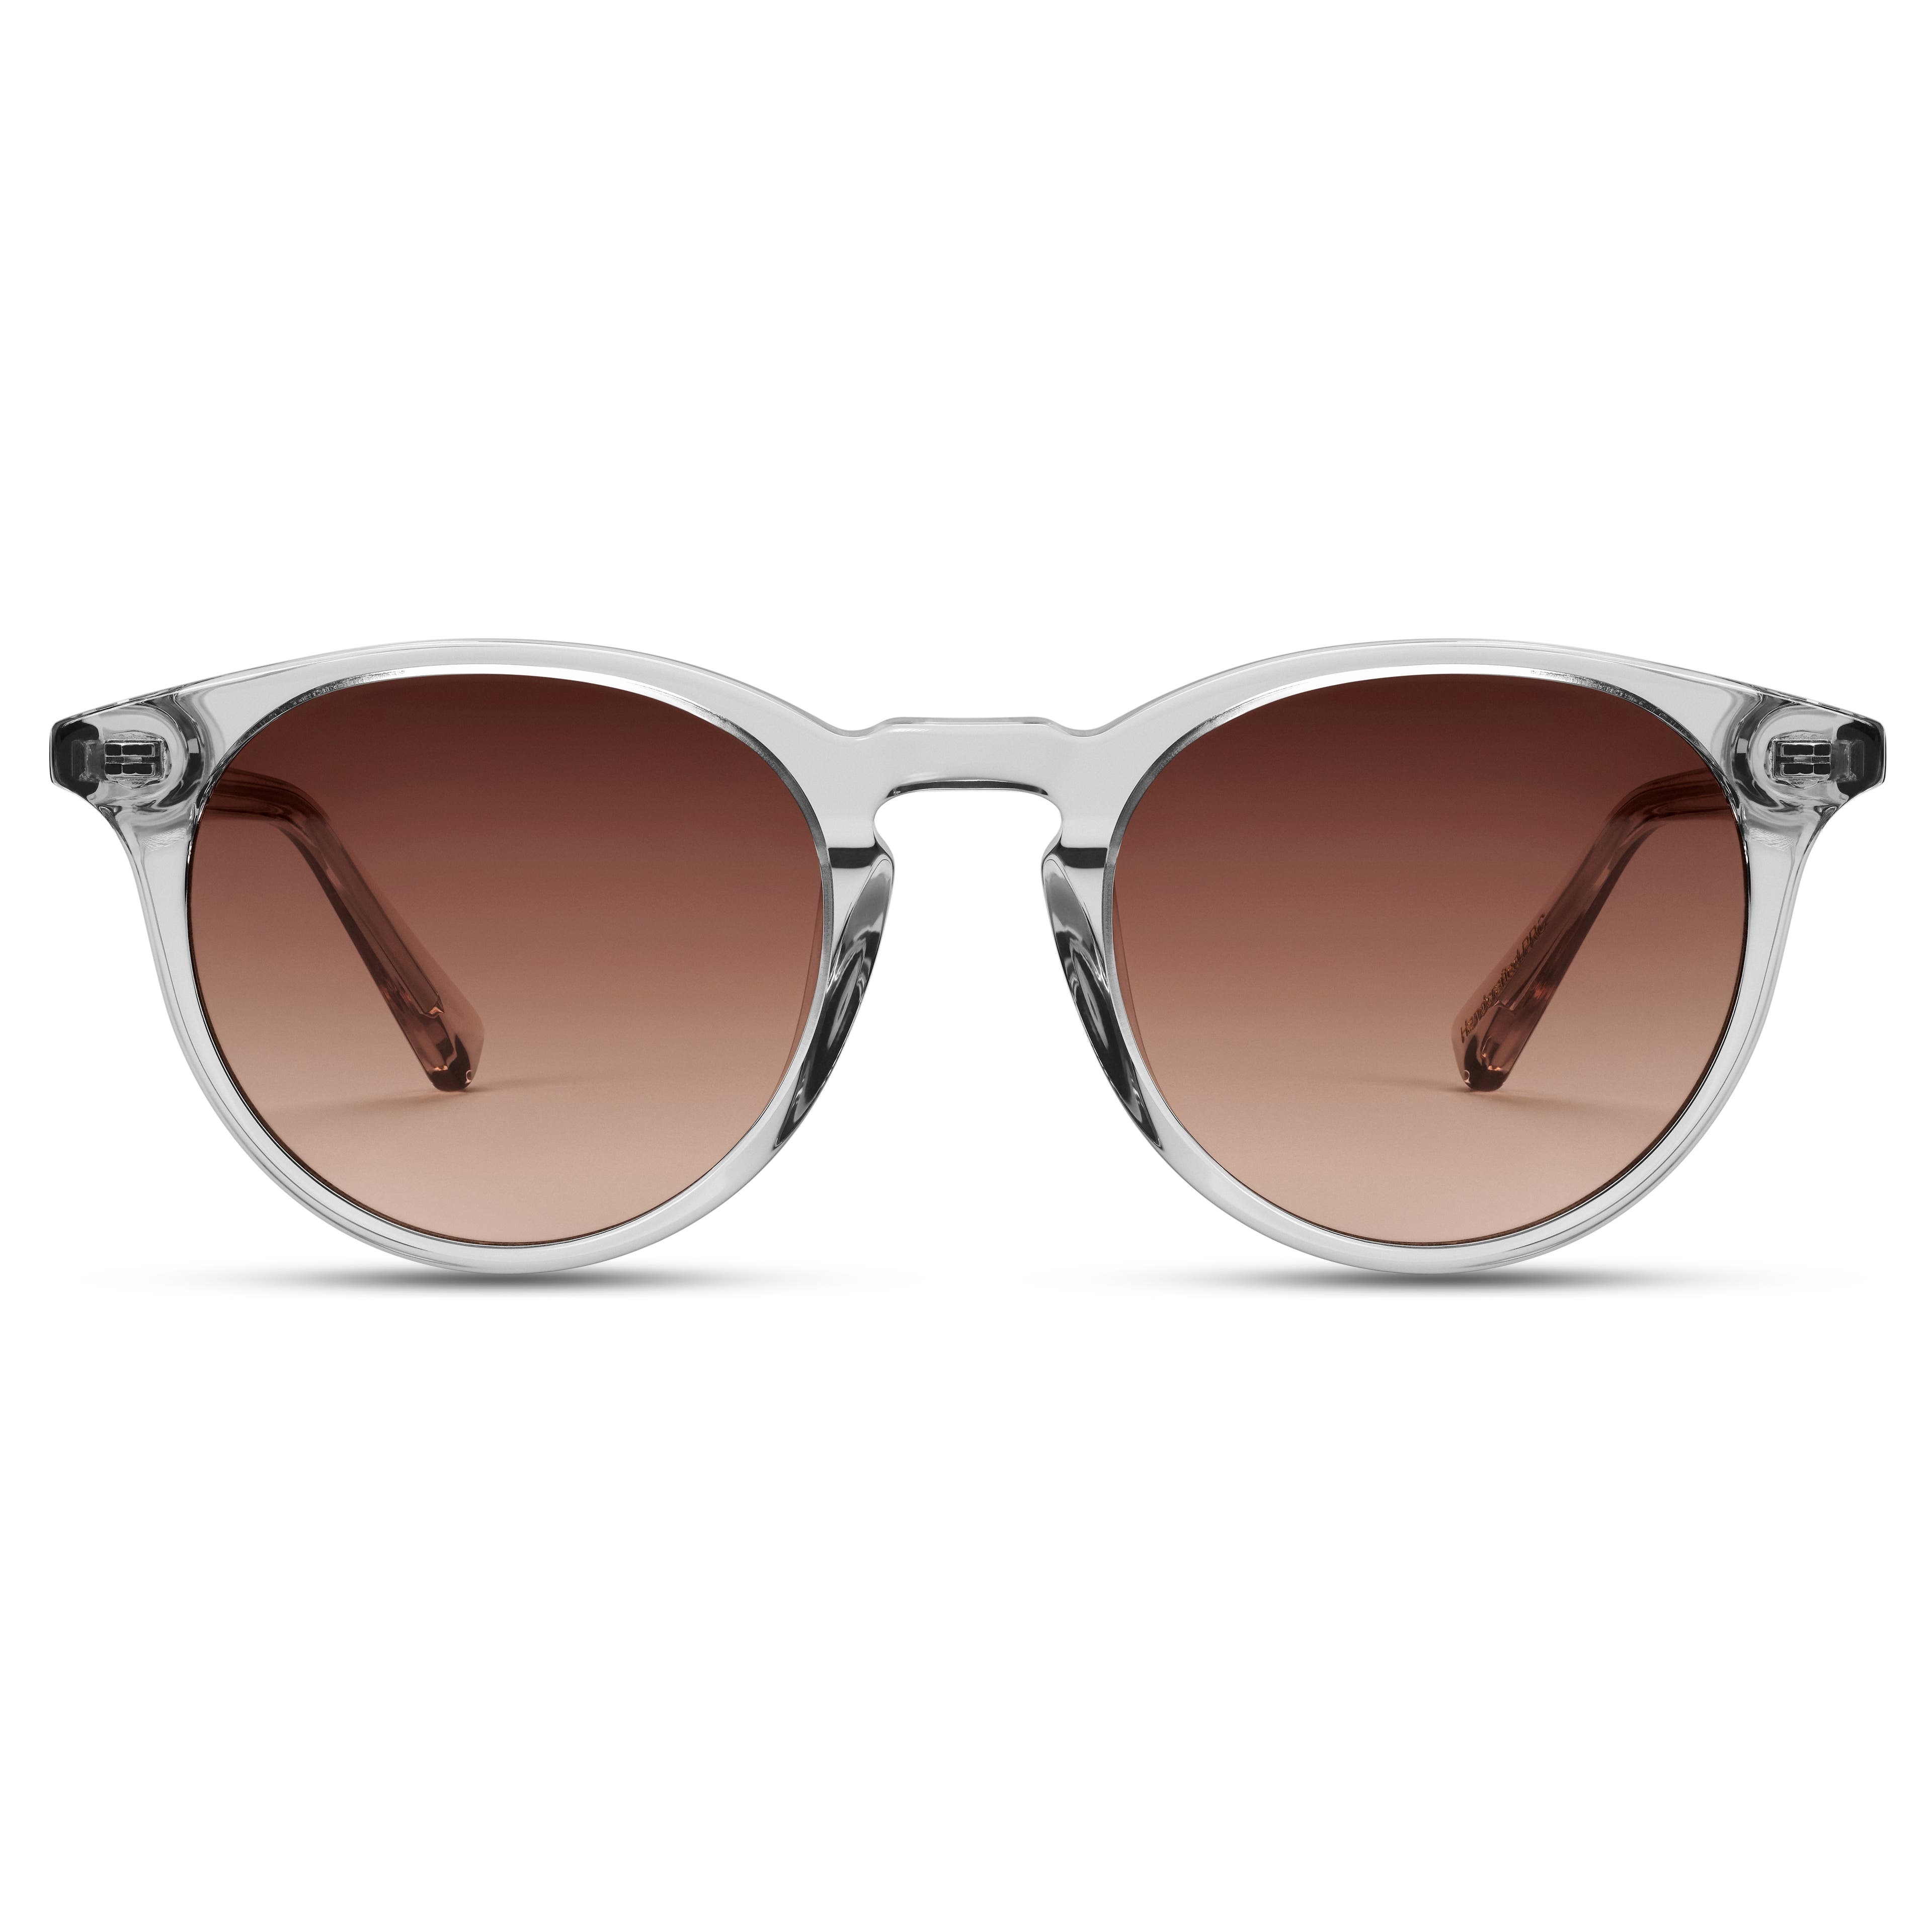 Round Brown Horn-Rimmed New Depp Sunglasses